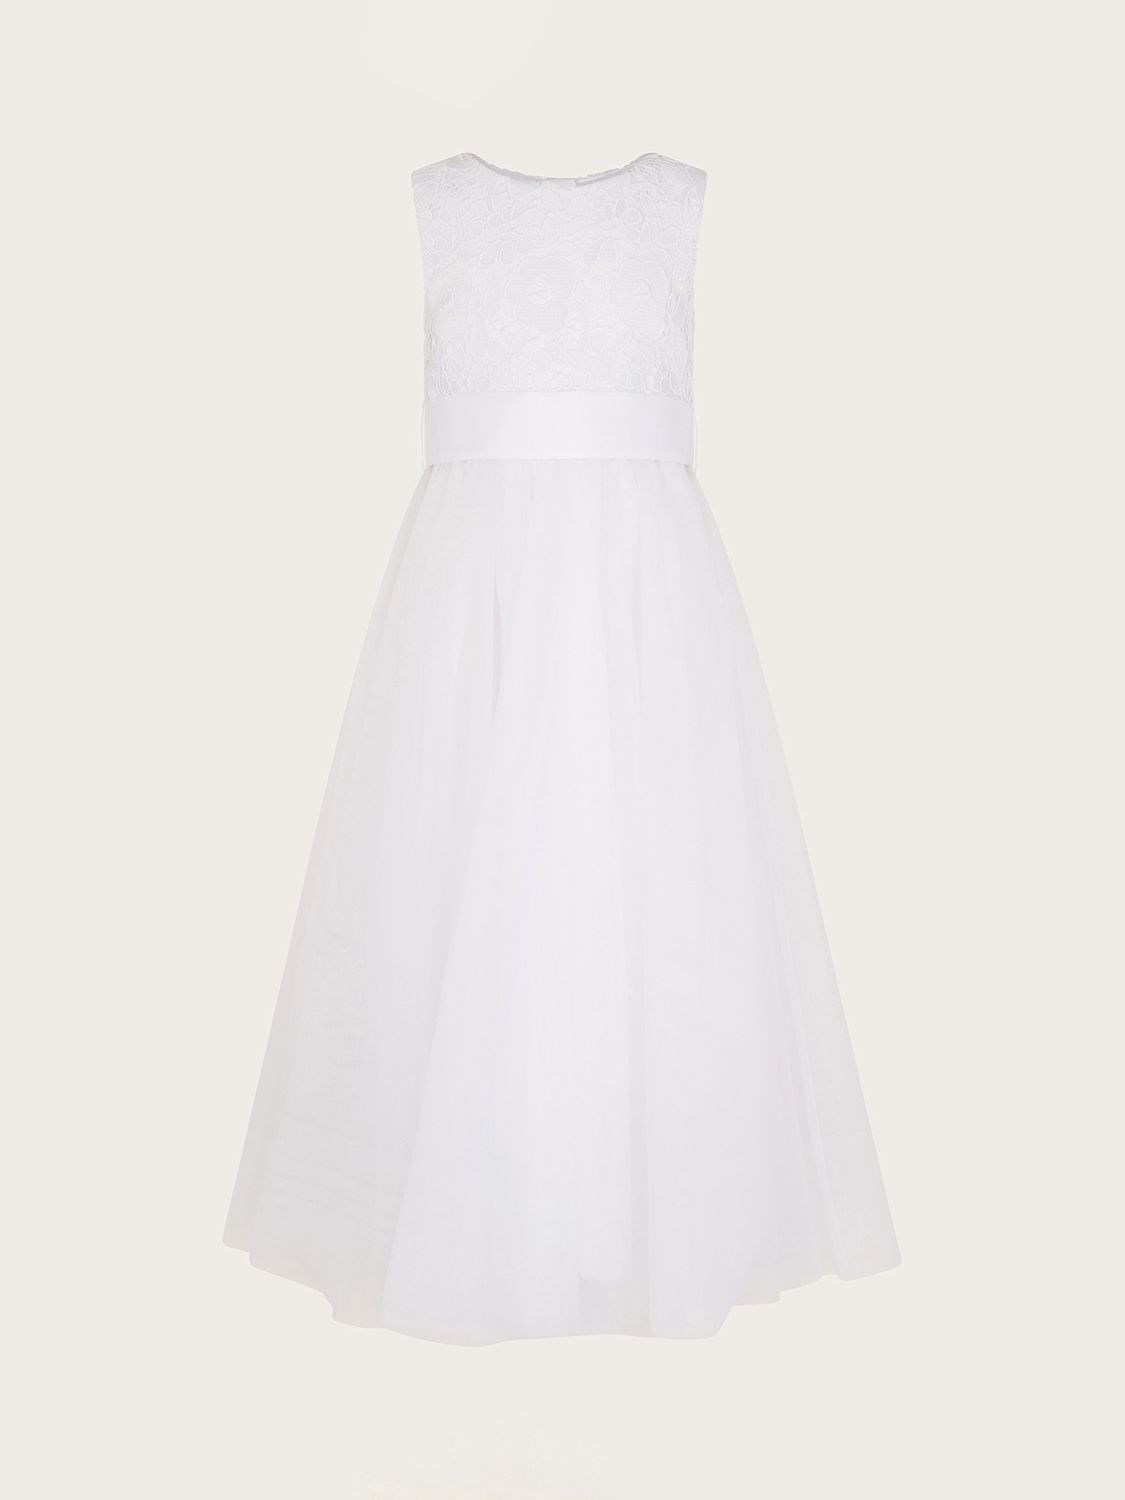 Monsoon Kids' Alice Communion Maxi Dress, White, 3 years